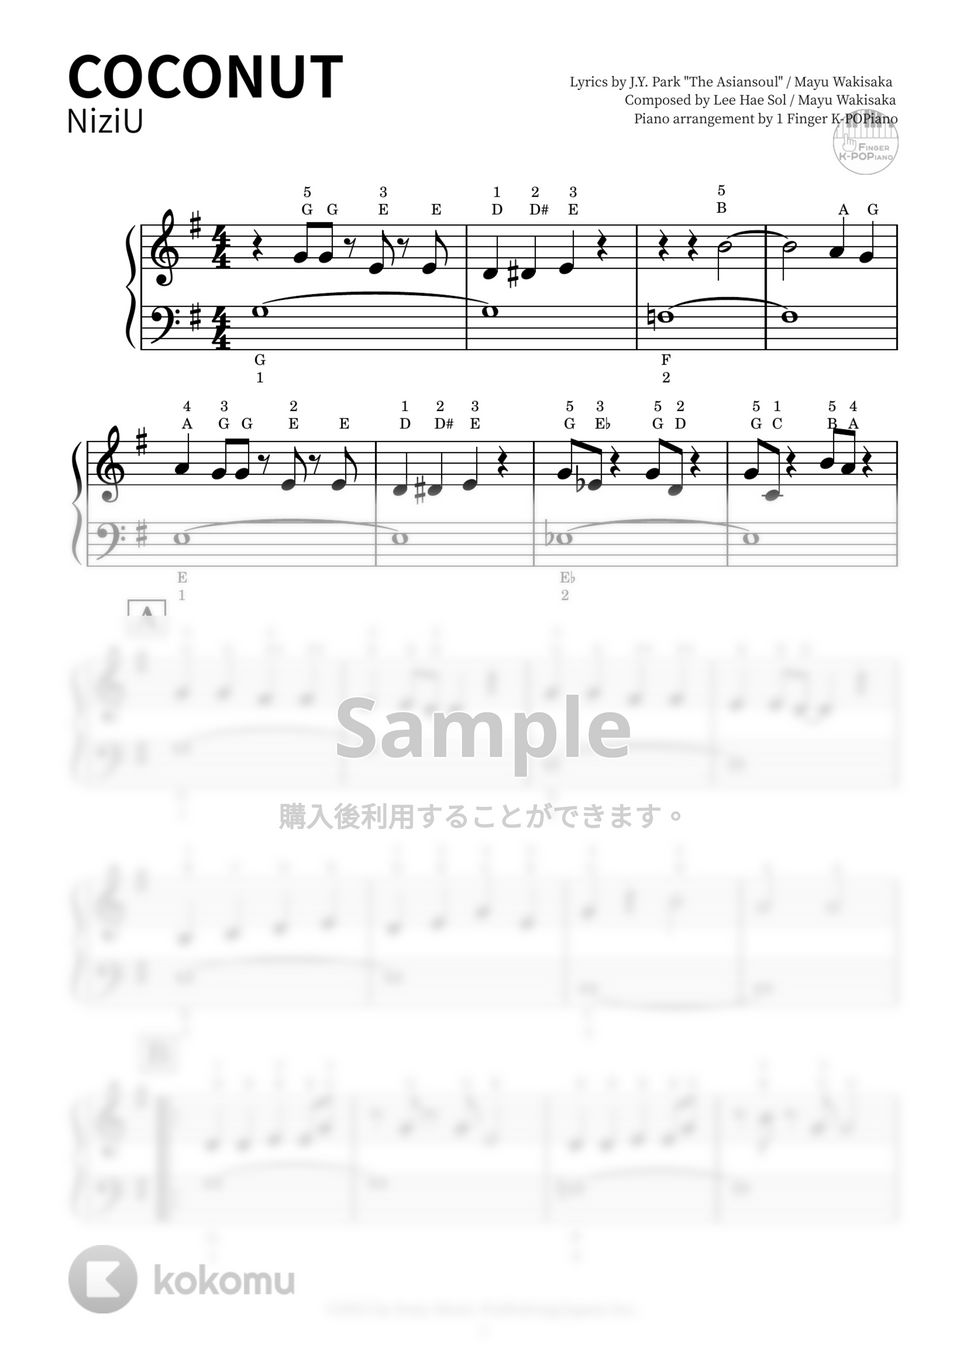 NiziU - COCONUT (英語CDEふりがな付き) by かんたんピアノ ♪ 1 Finger K-POPiano